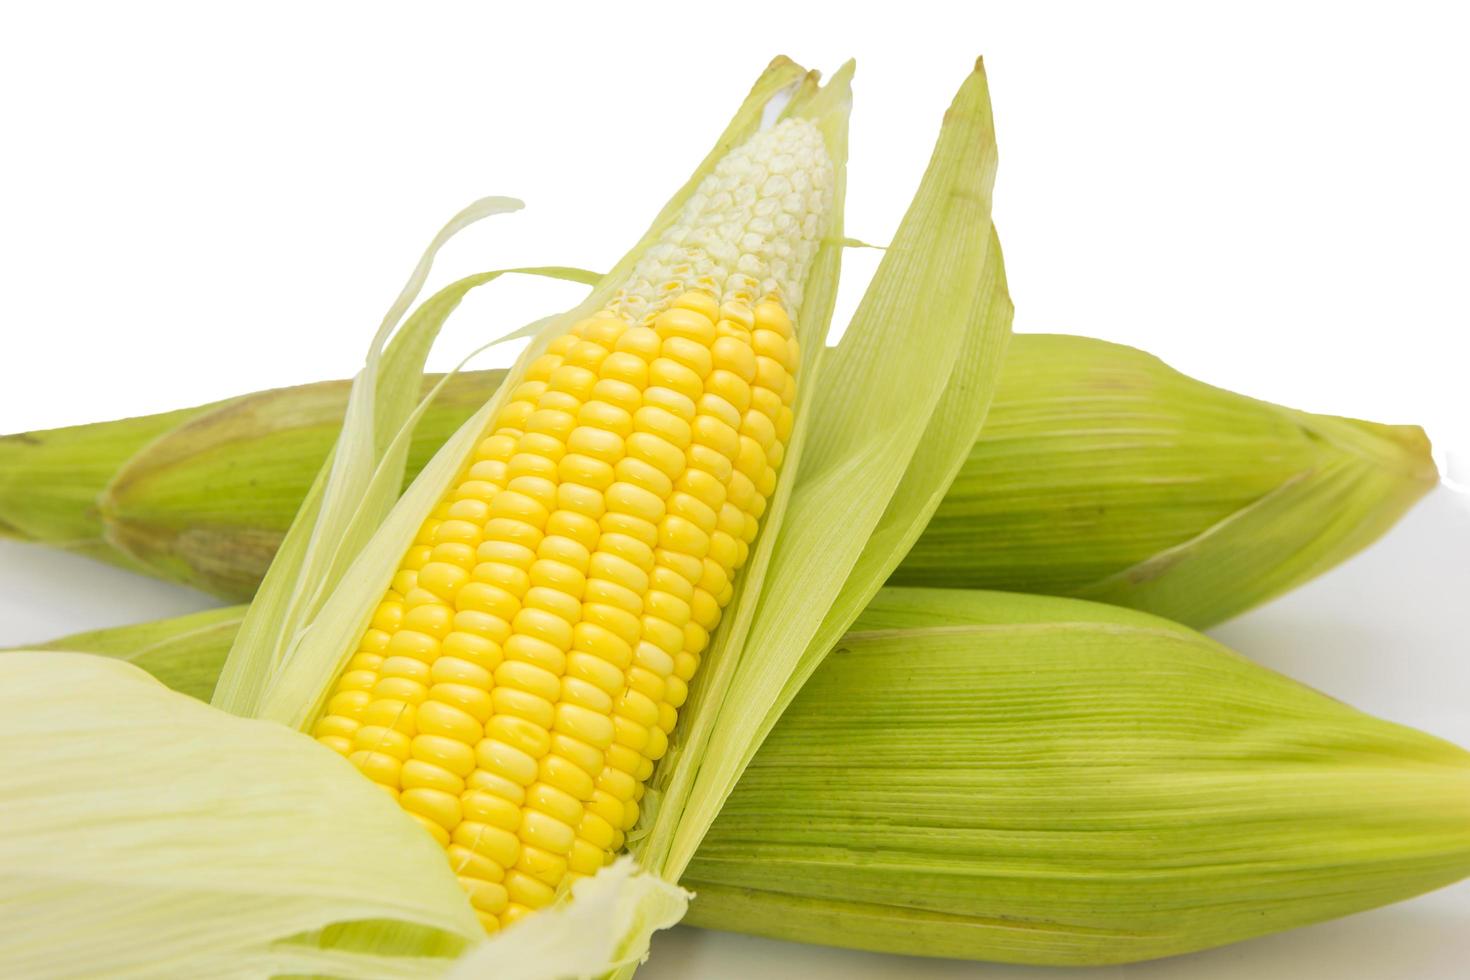 Fresh corn on cobs on white background, closeup photo